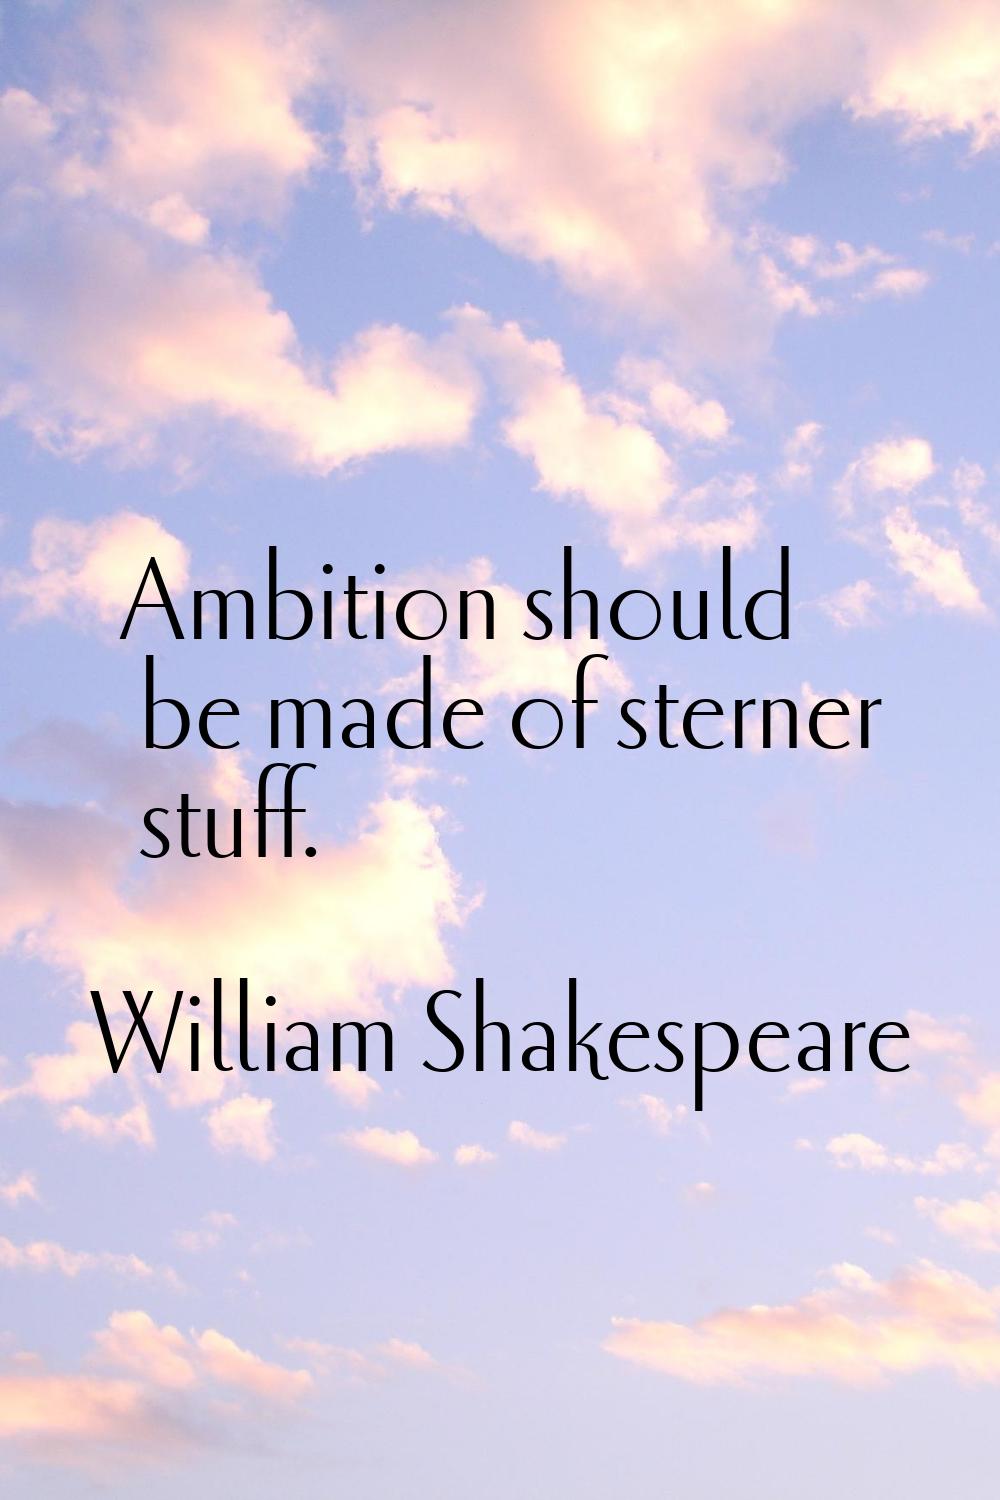 Ambition should be made of sterner stuff.